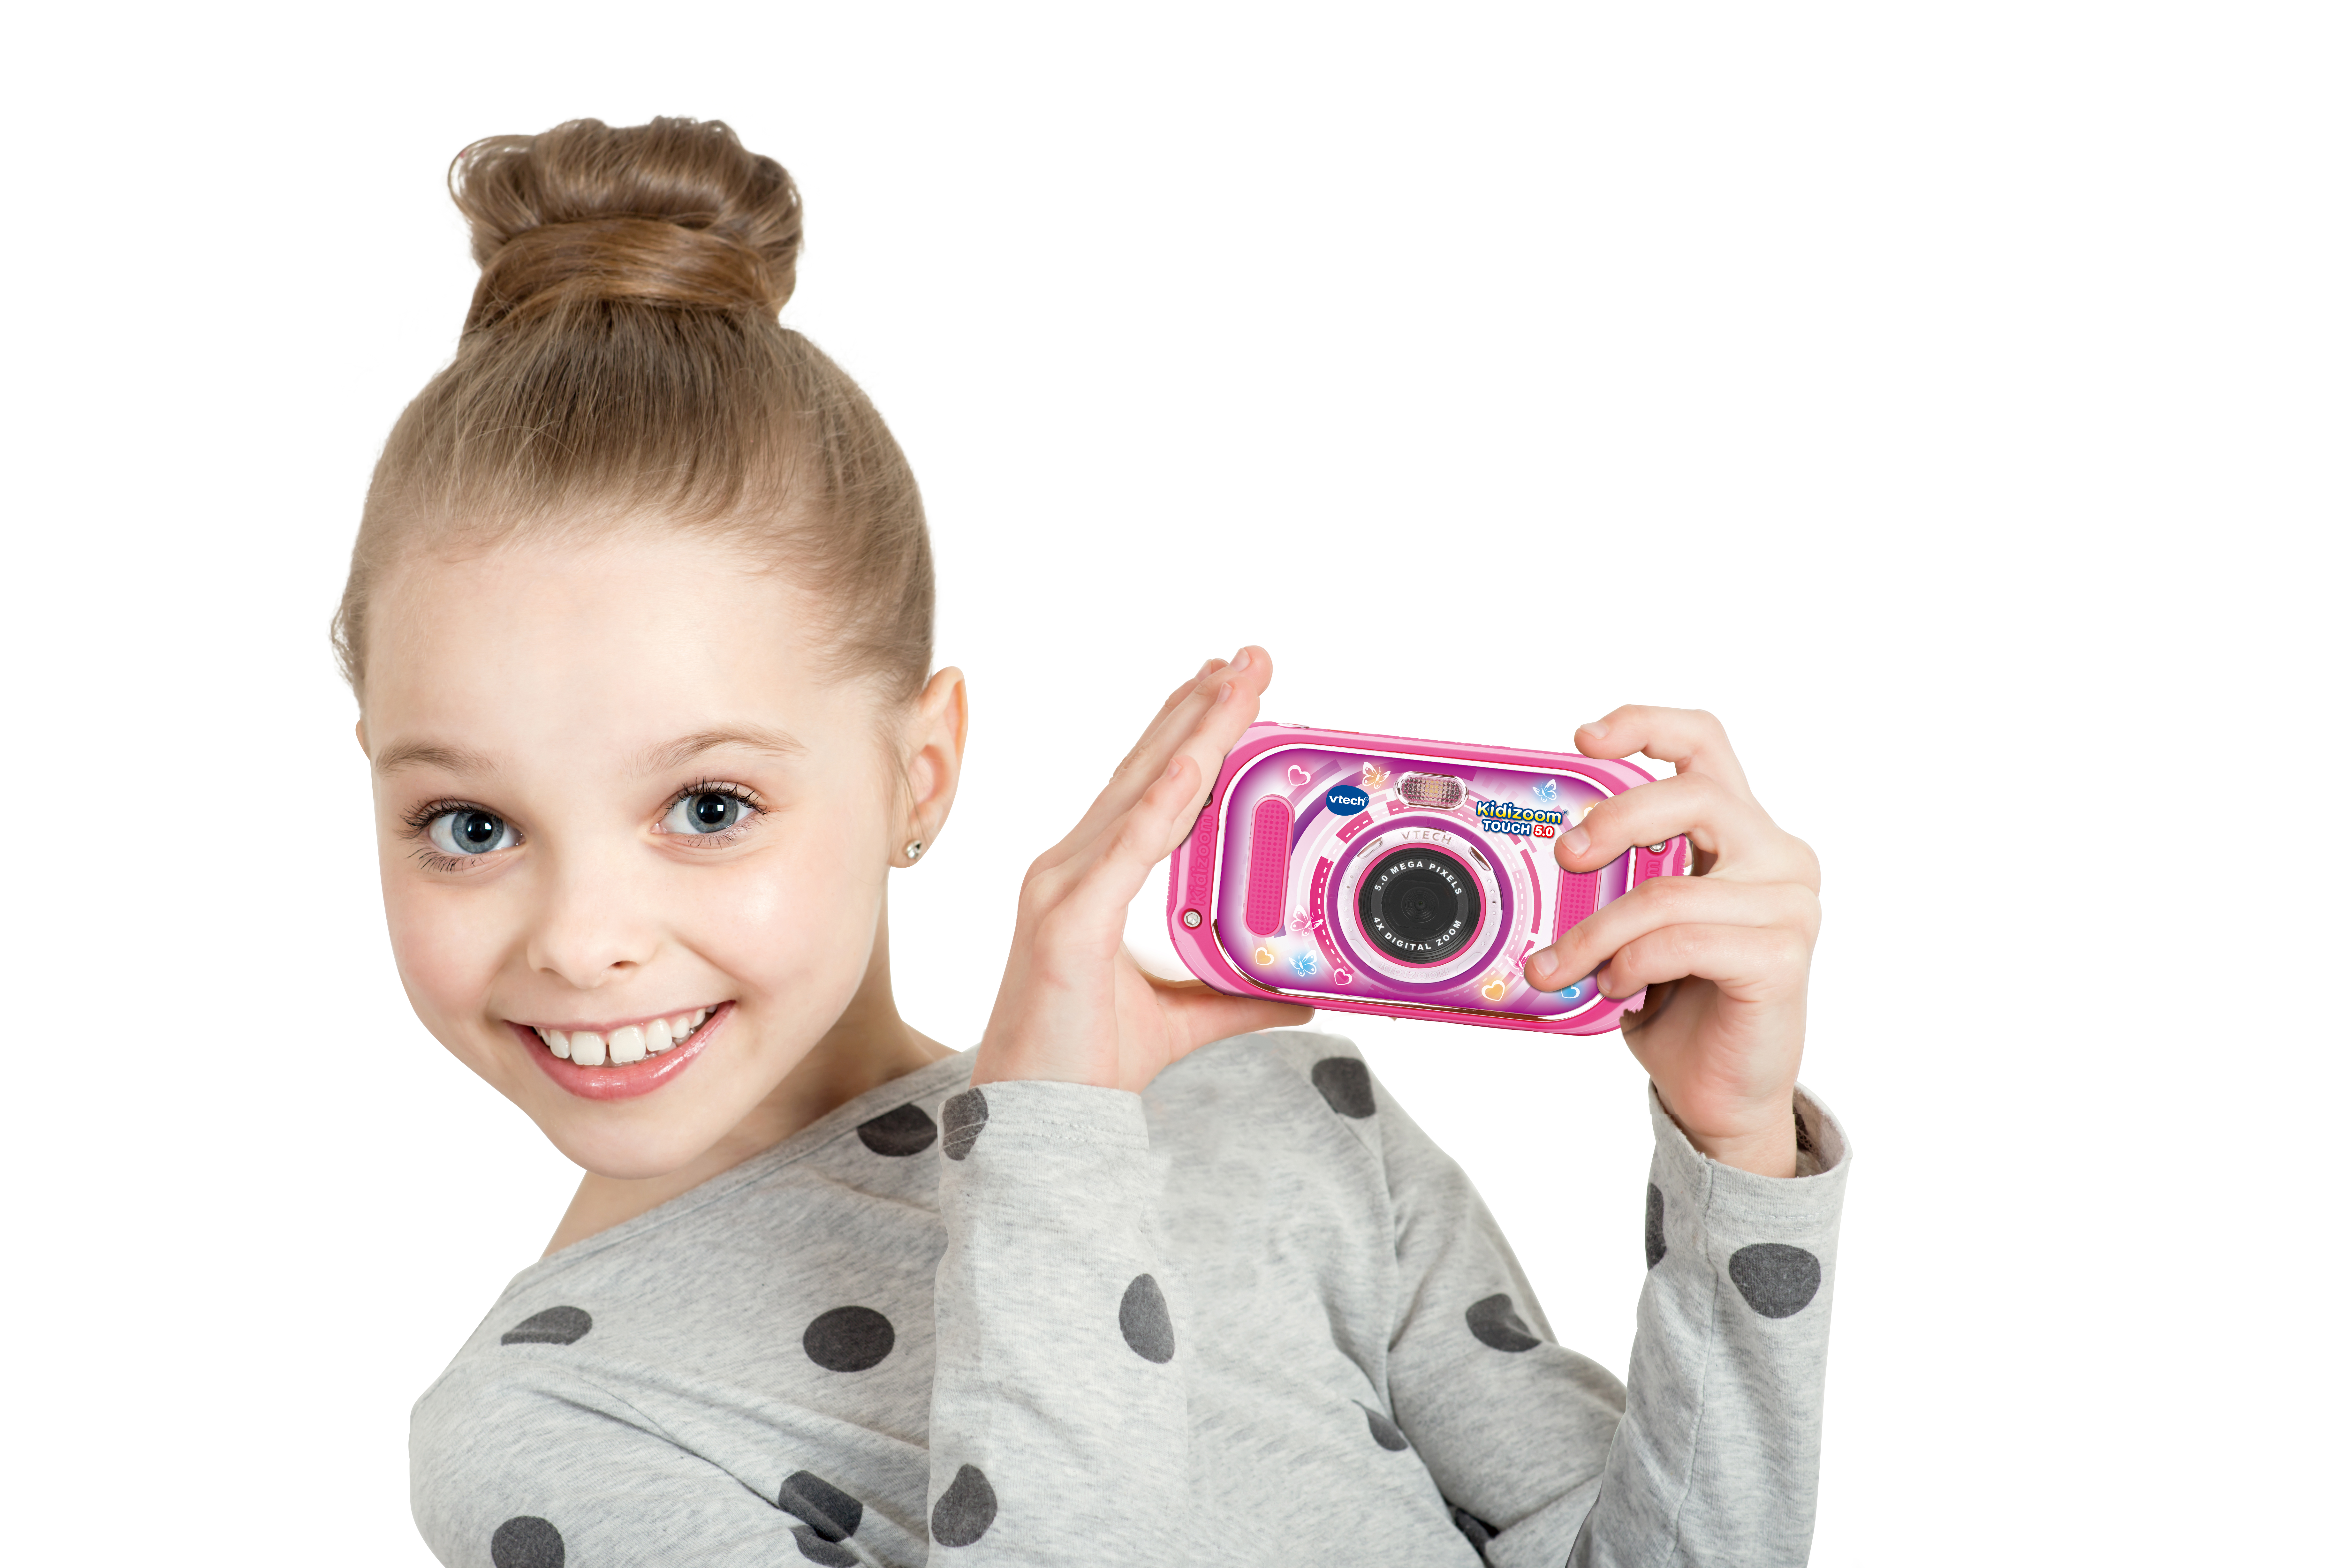 Pink Kidizoom VTECH 5.0 Touch Mehrfarbig Kinderkamera,